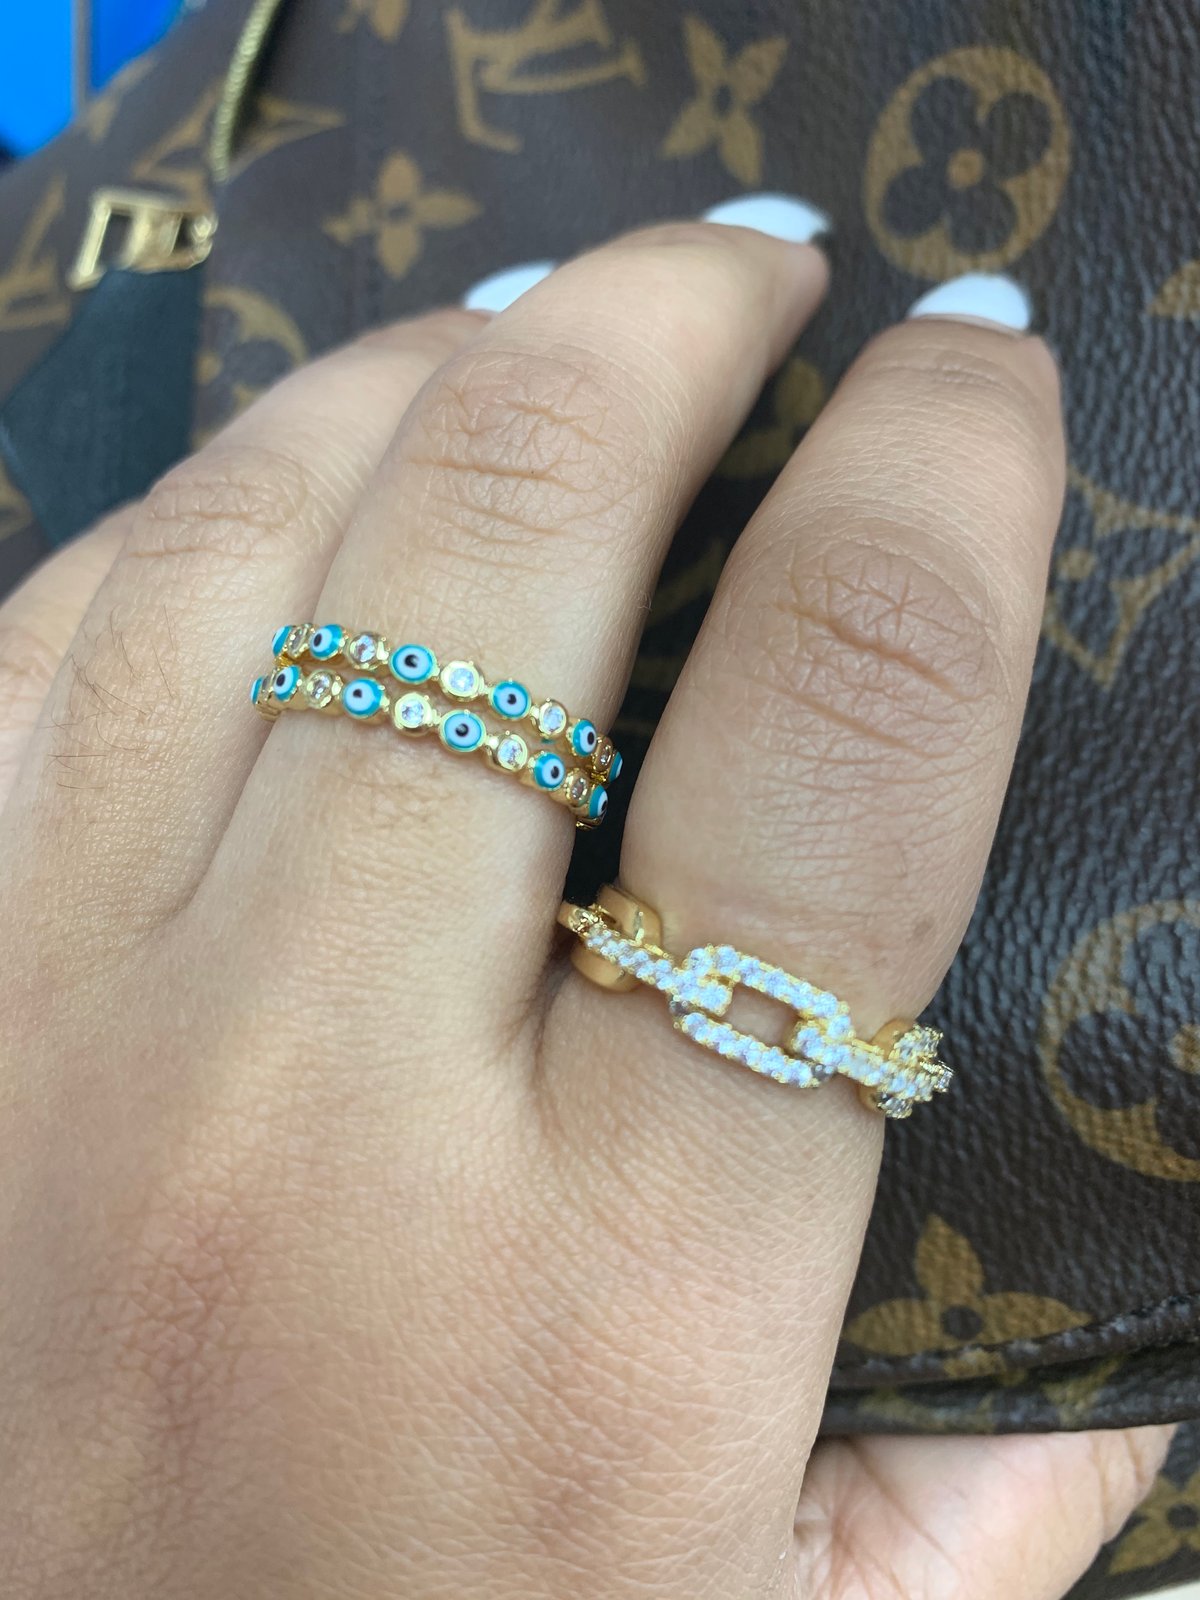 Criss Cross Sterling Silver Rings for Women Index Finger Ring Original  Design Handmade Jewelry - Etsy